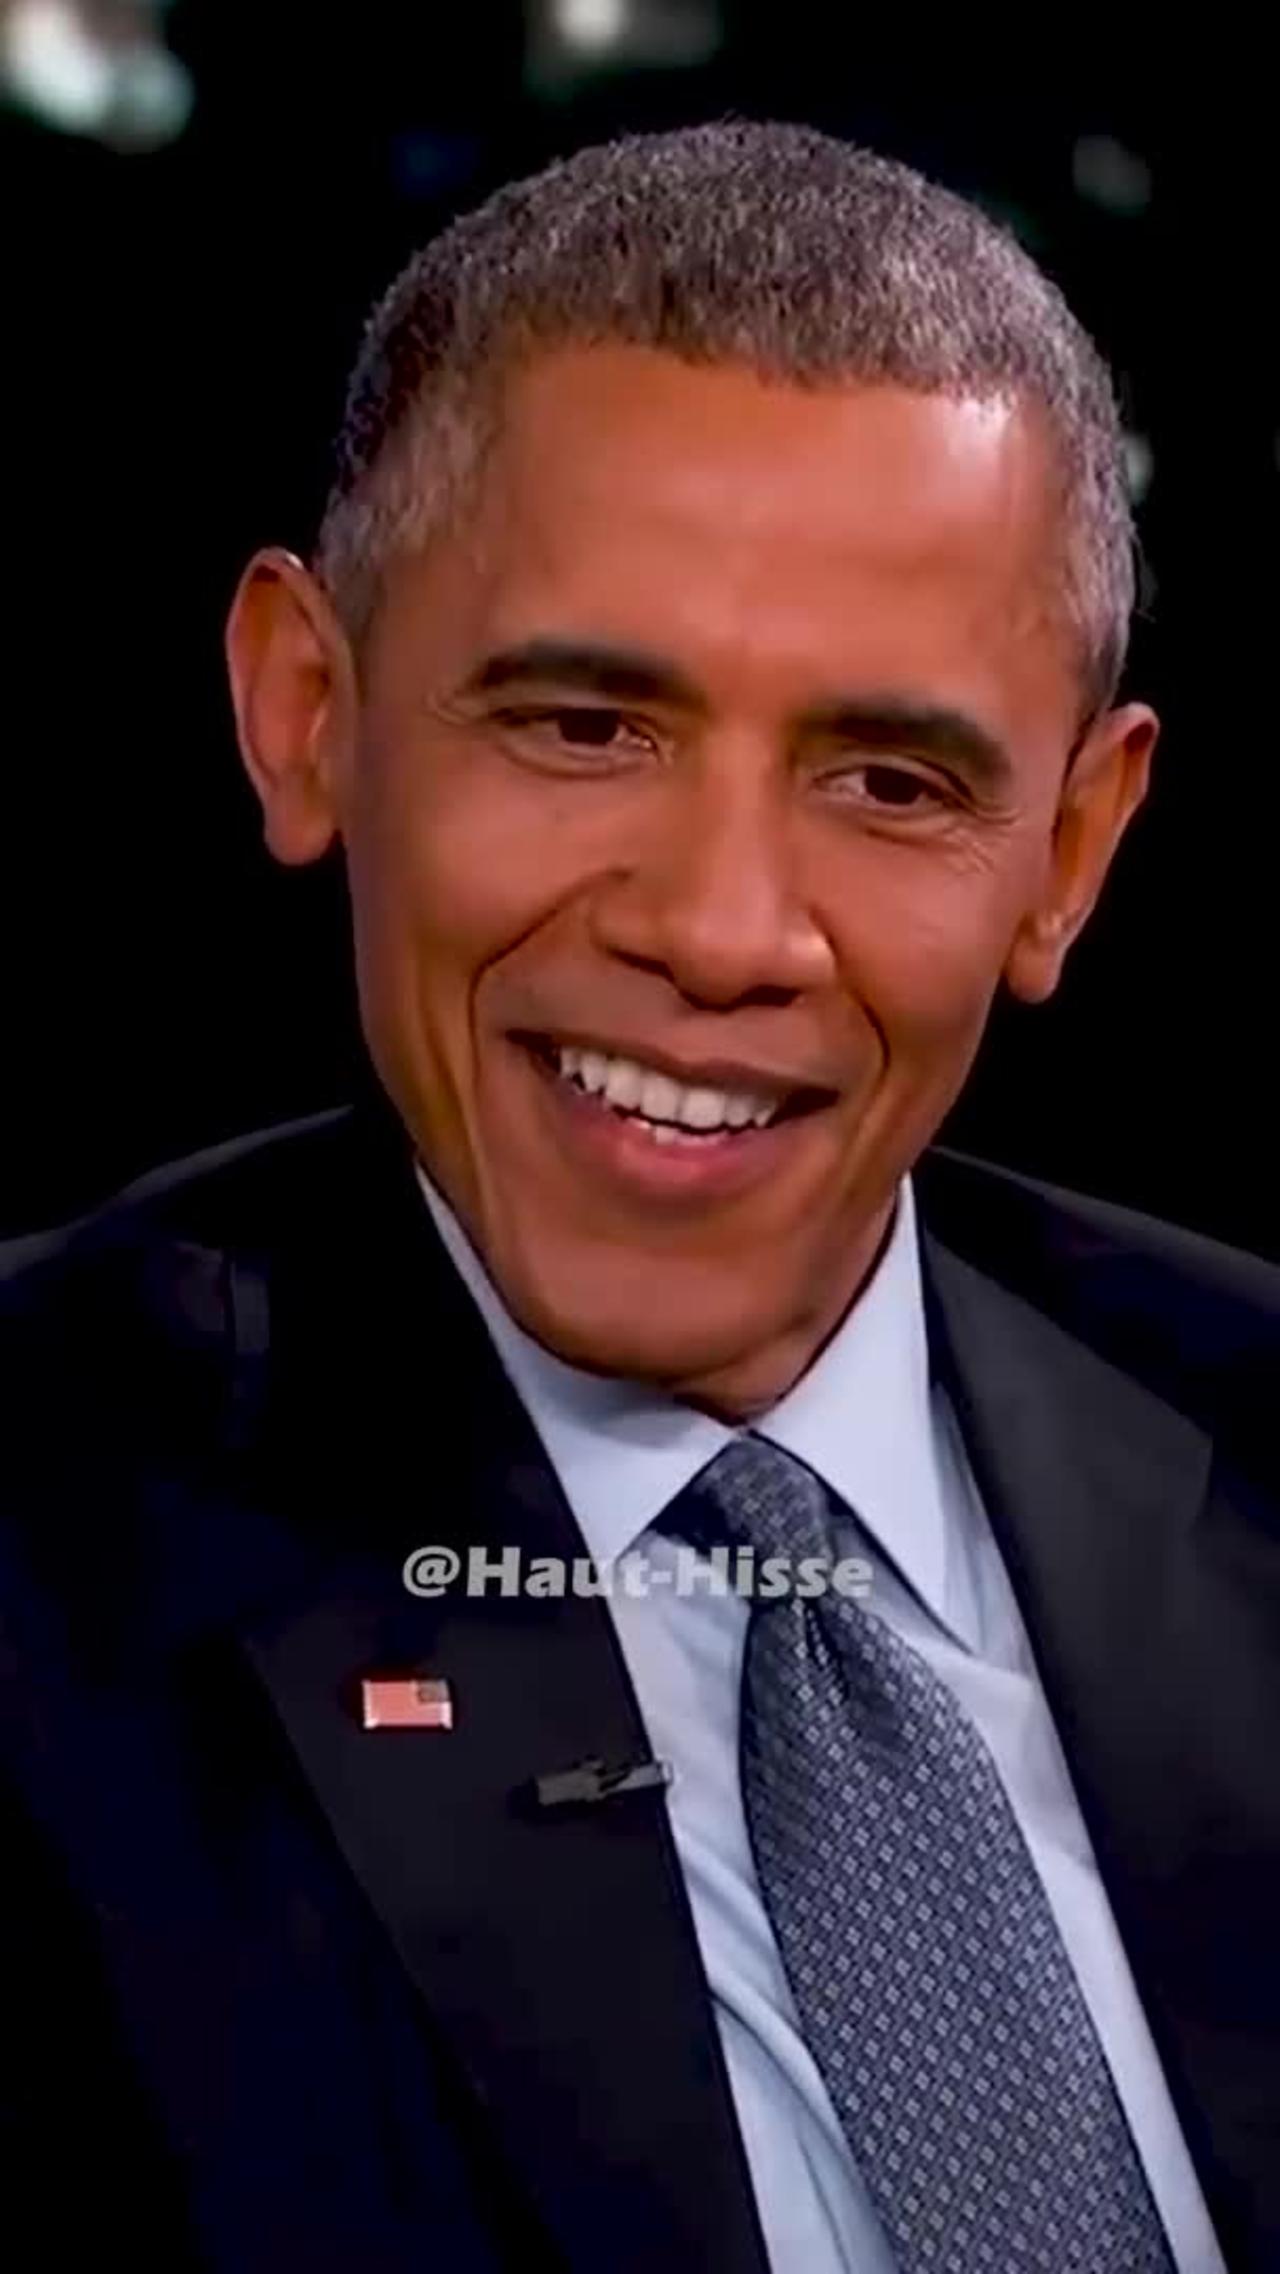 President Barack Obama Funny Moments With The Secret Service on Jimmy Kimmel Show